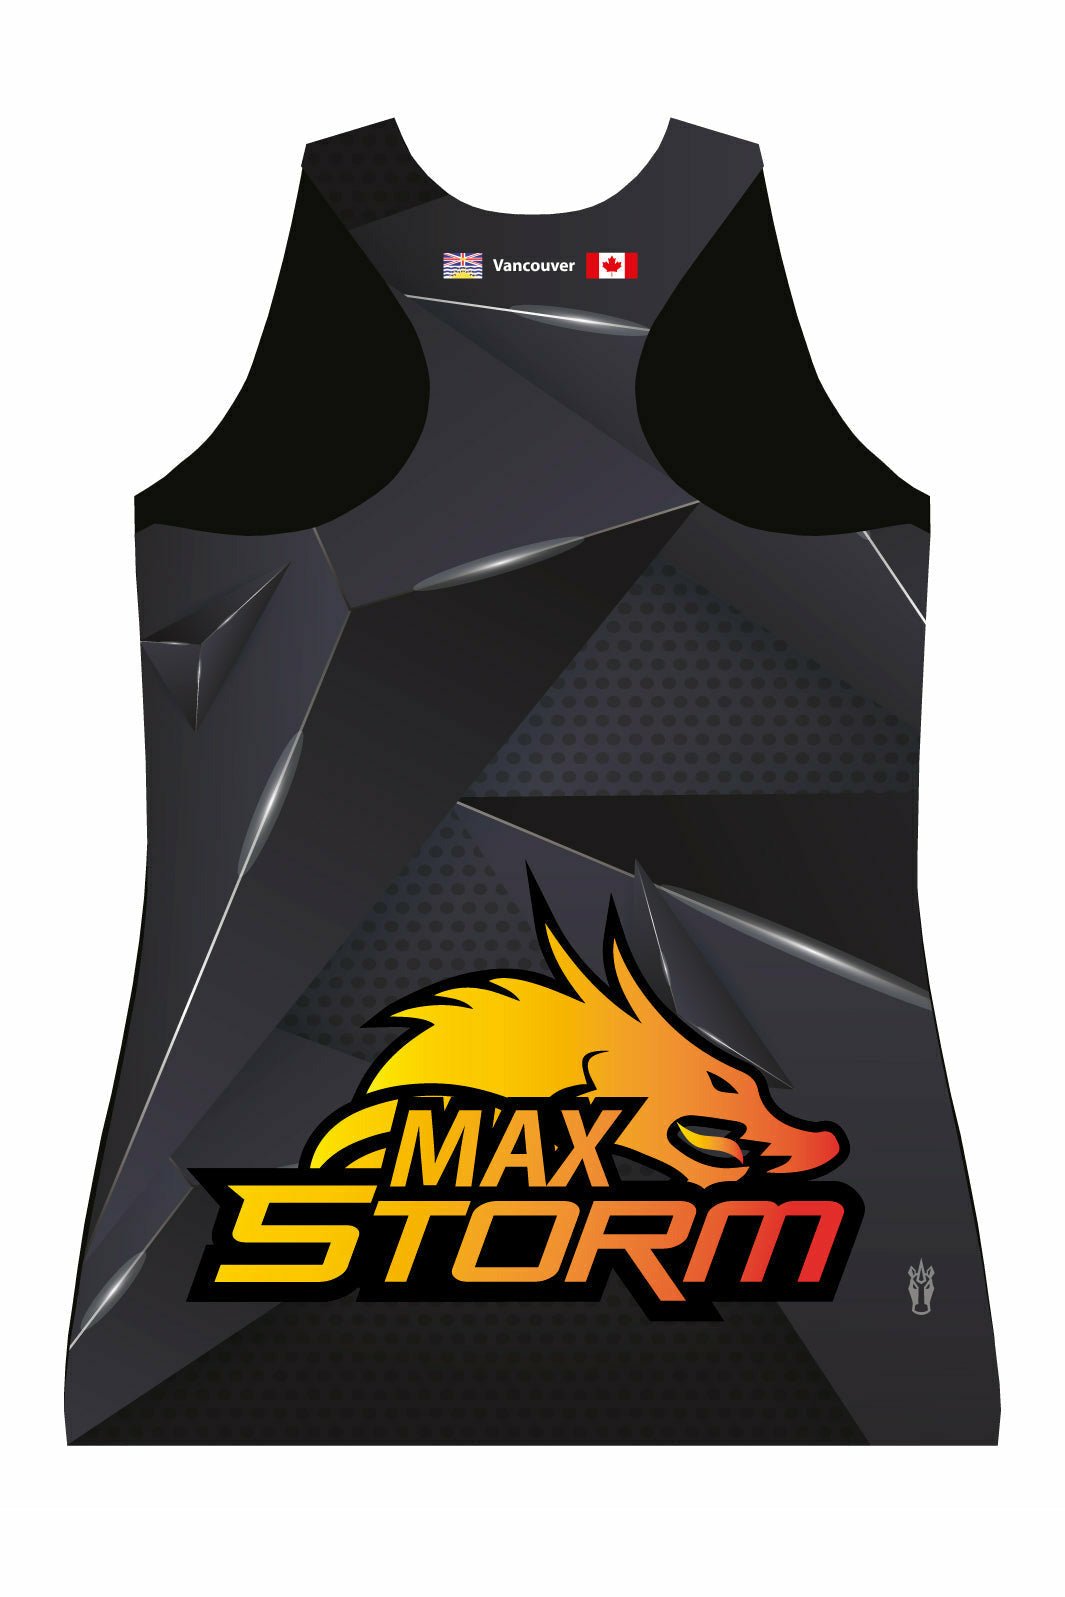 Max Storm H2O Women's Athletic Tank Top - Oddball Workshop